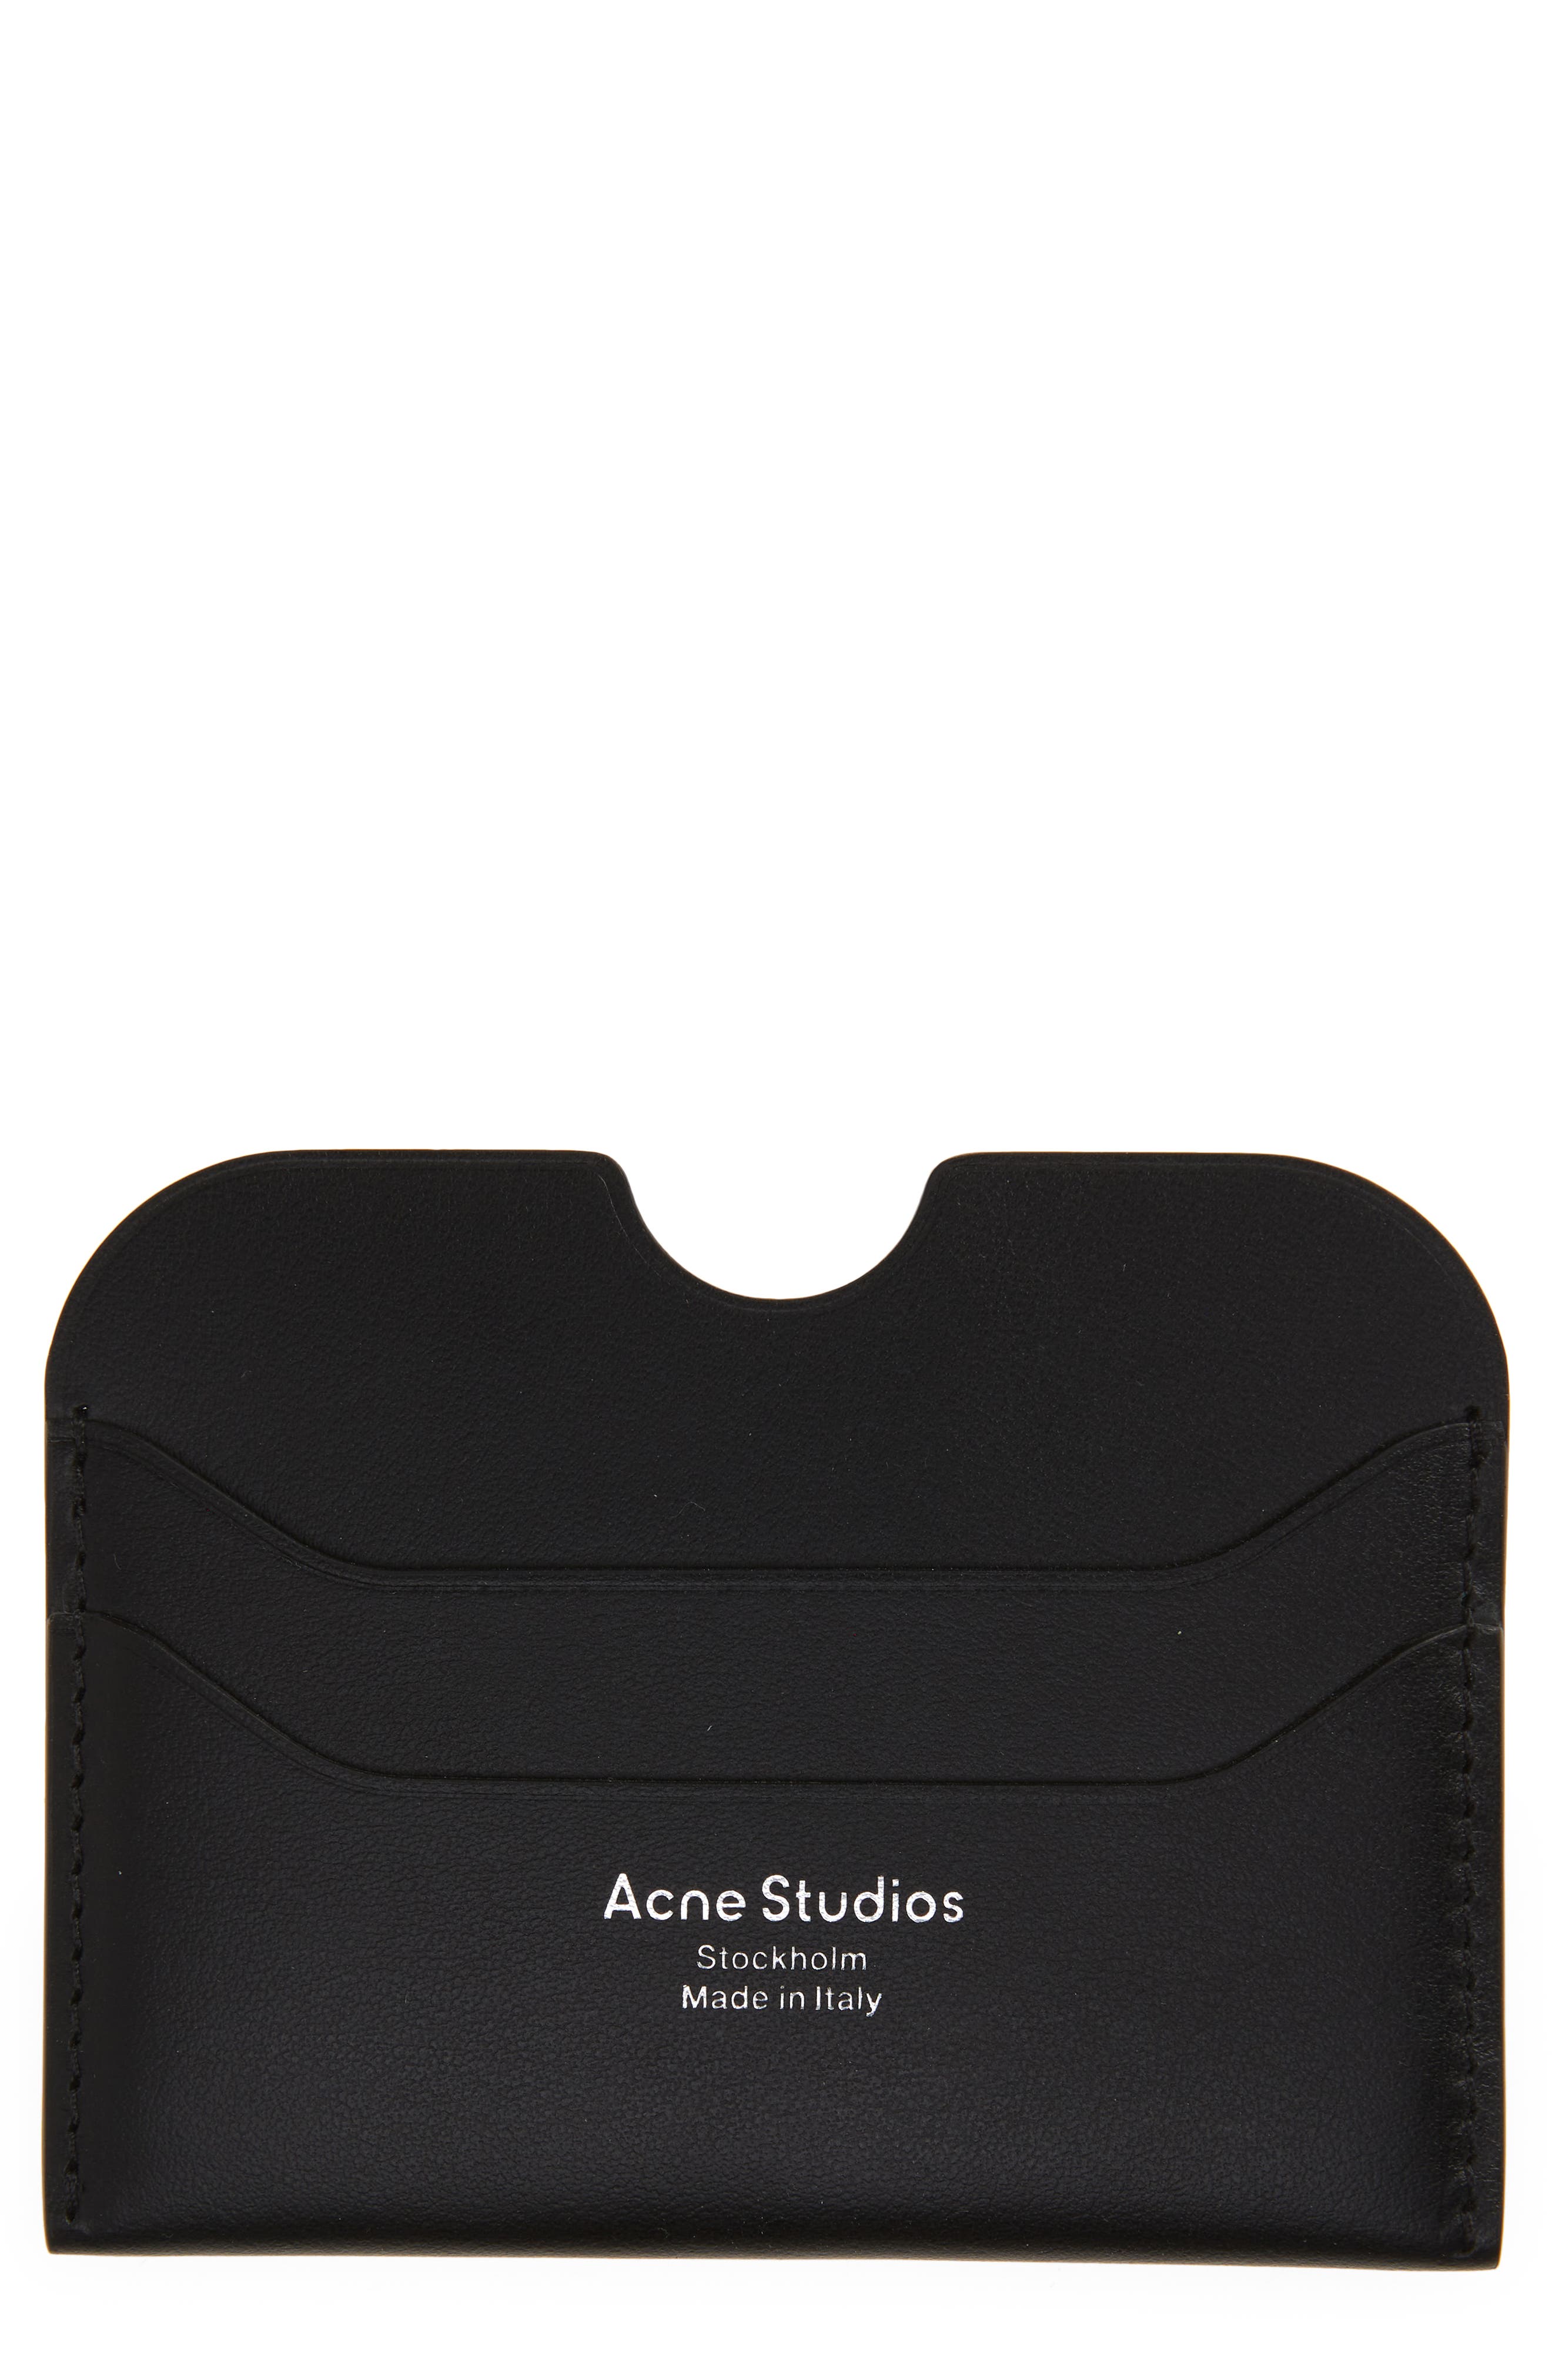 Acne Studios Logo Leather Card Case in Black at Nordstrom